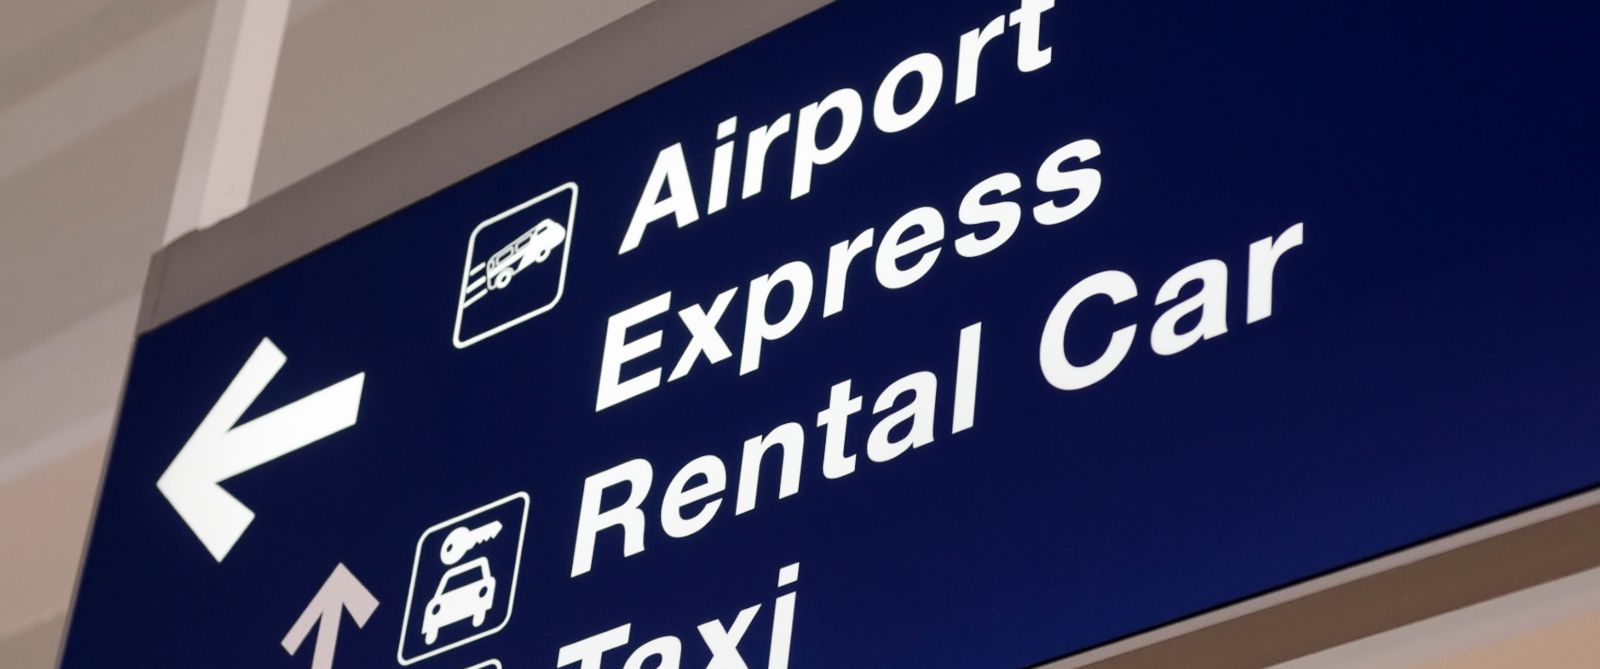 mexico city international airport car rental agencies